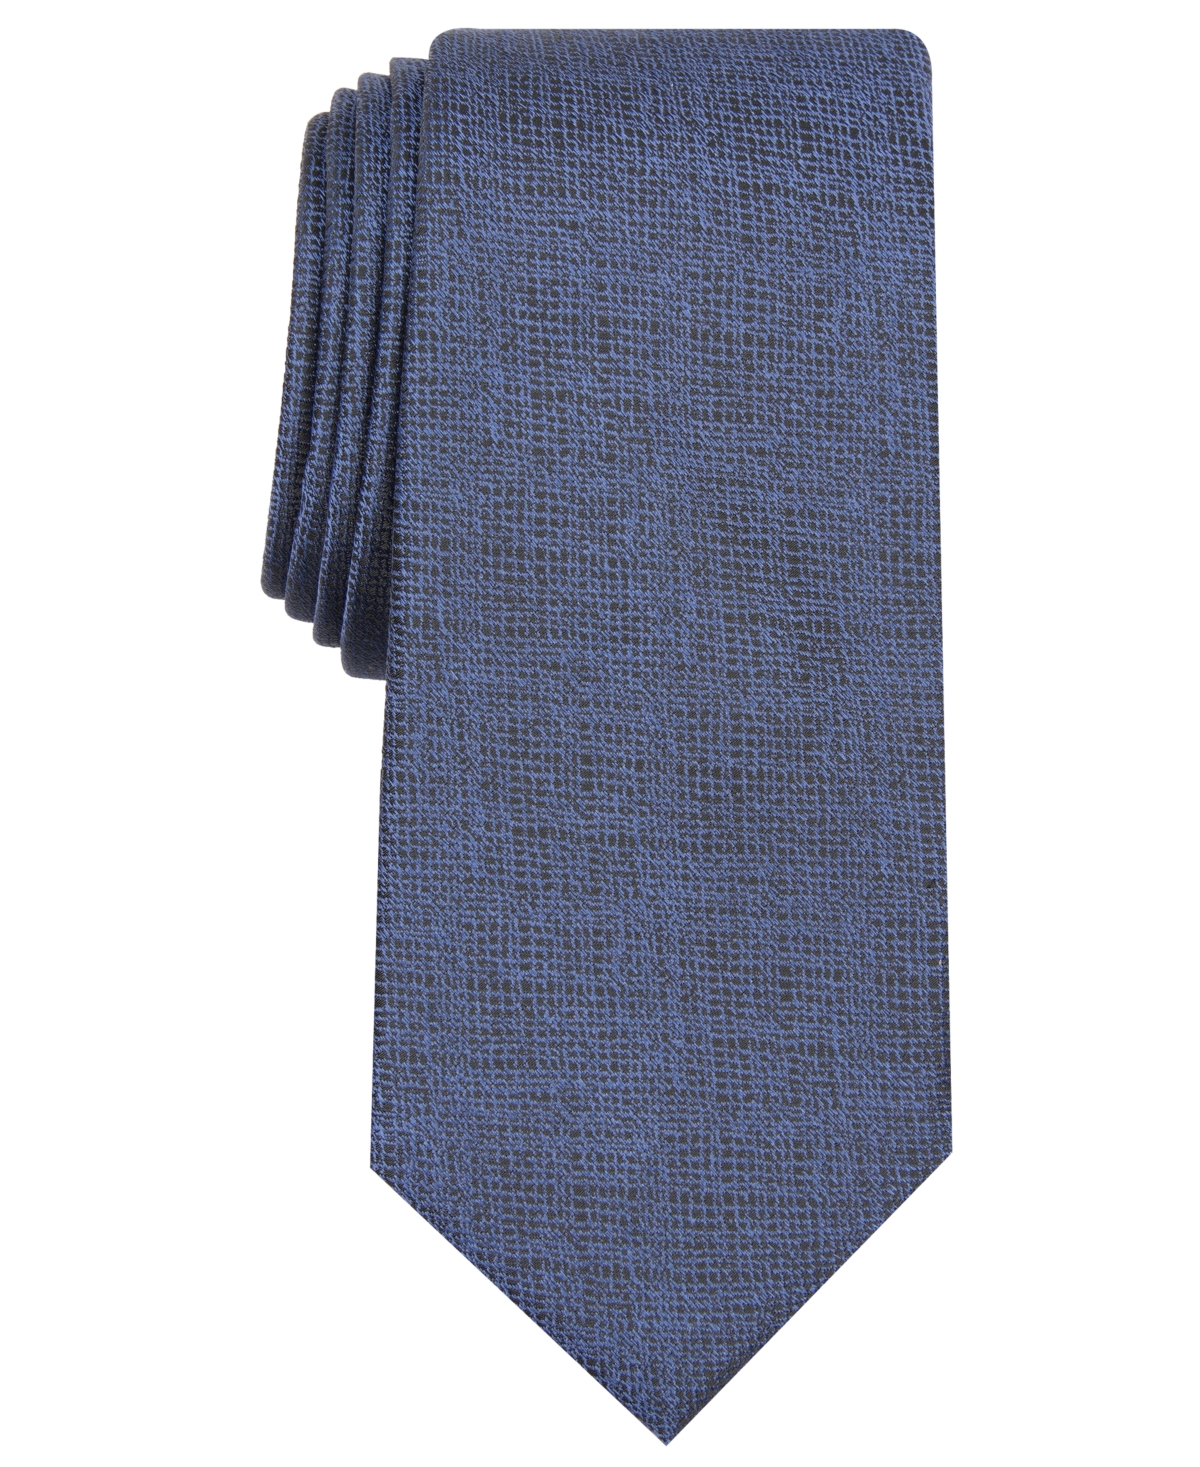 Men's Solid Slim Tie, Created for Macy's - Purple